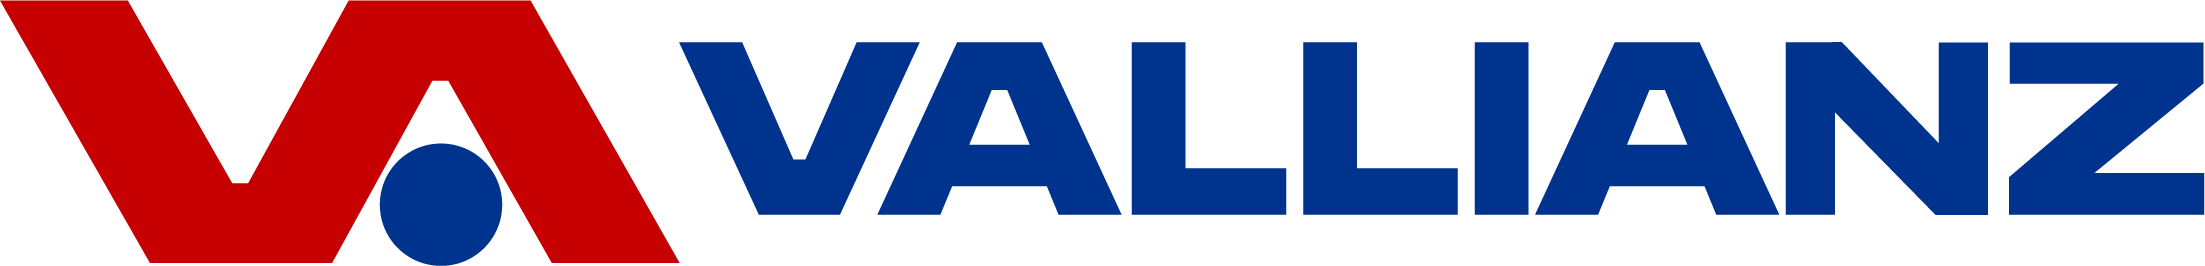 Vallianz Corporate Services Pte. Ltd. company logo